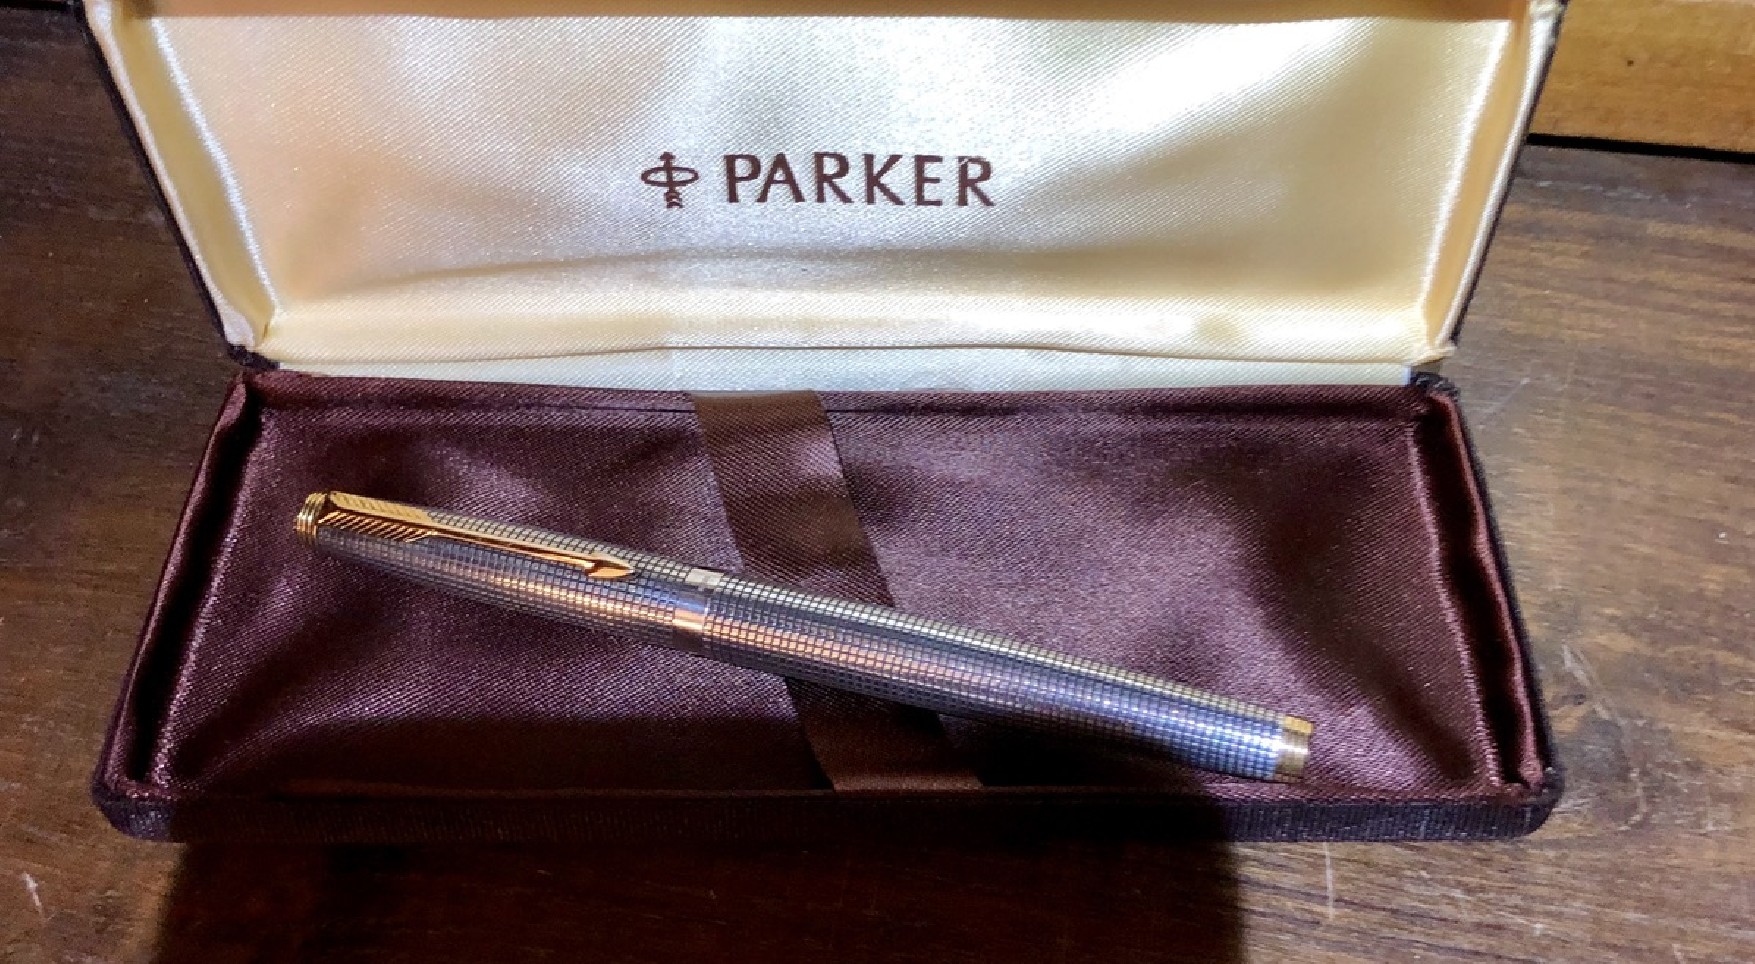 stylo plume Parker argent massif